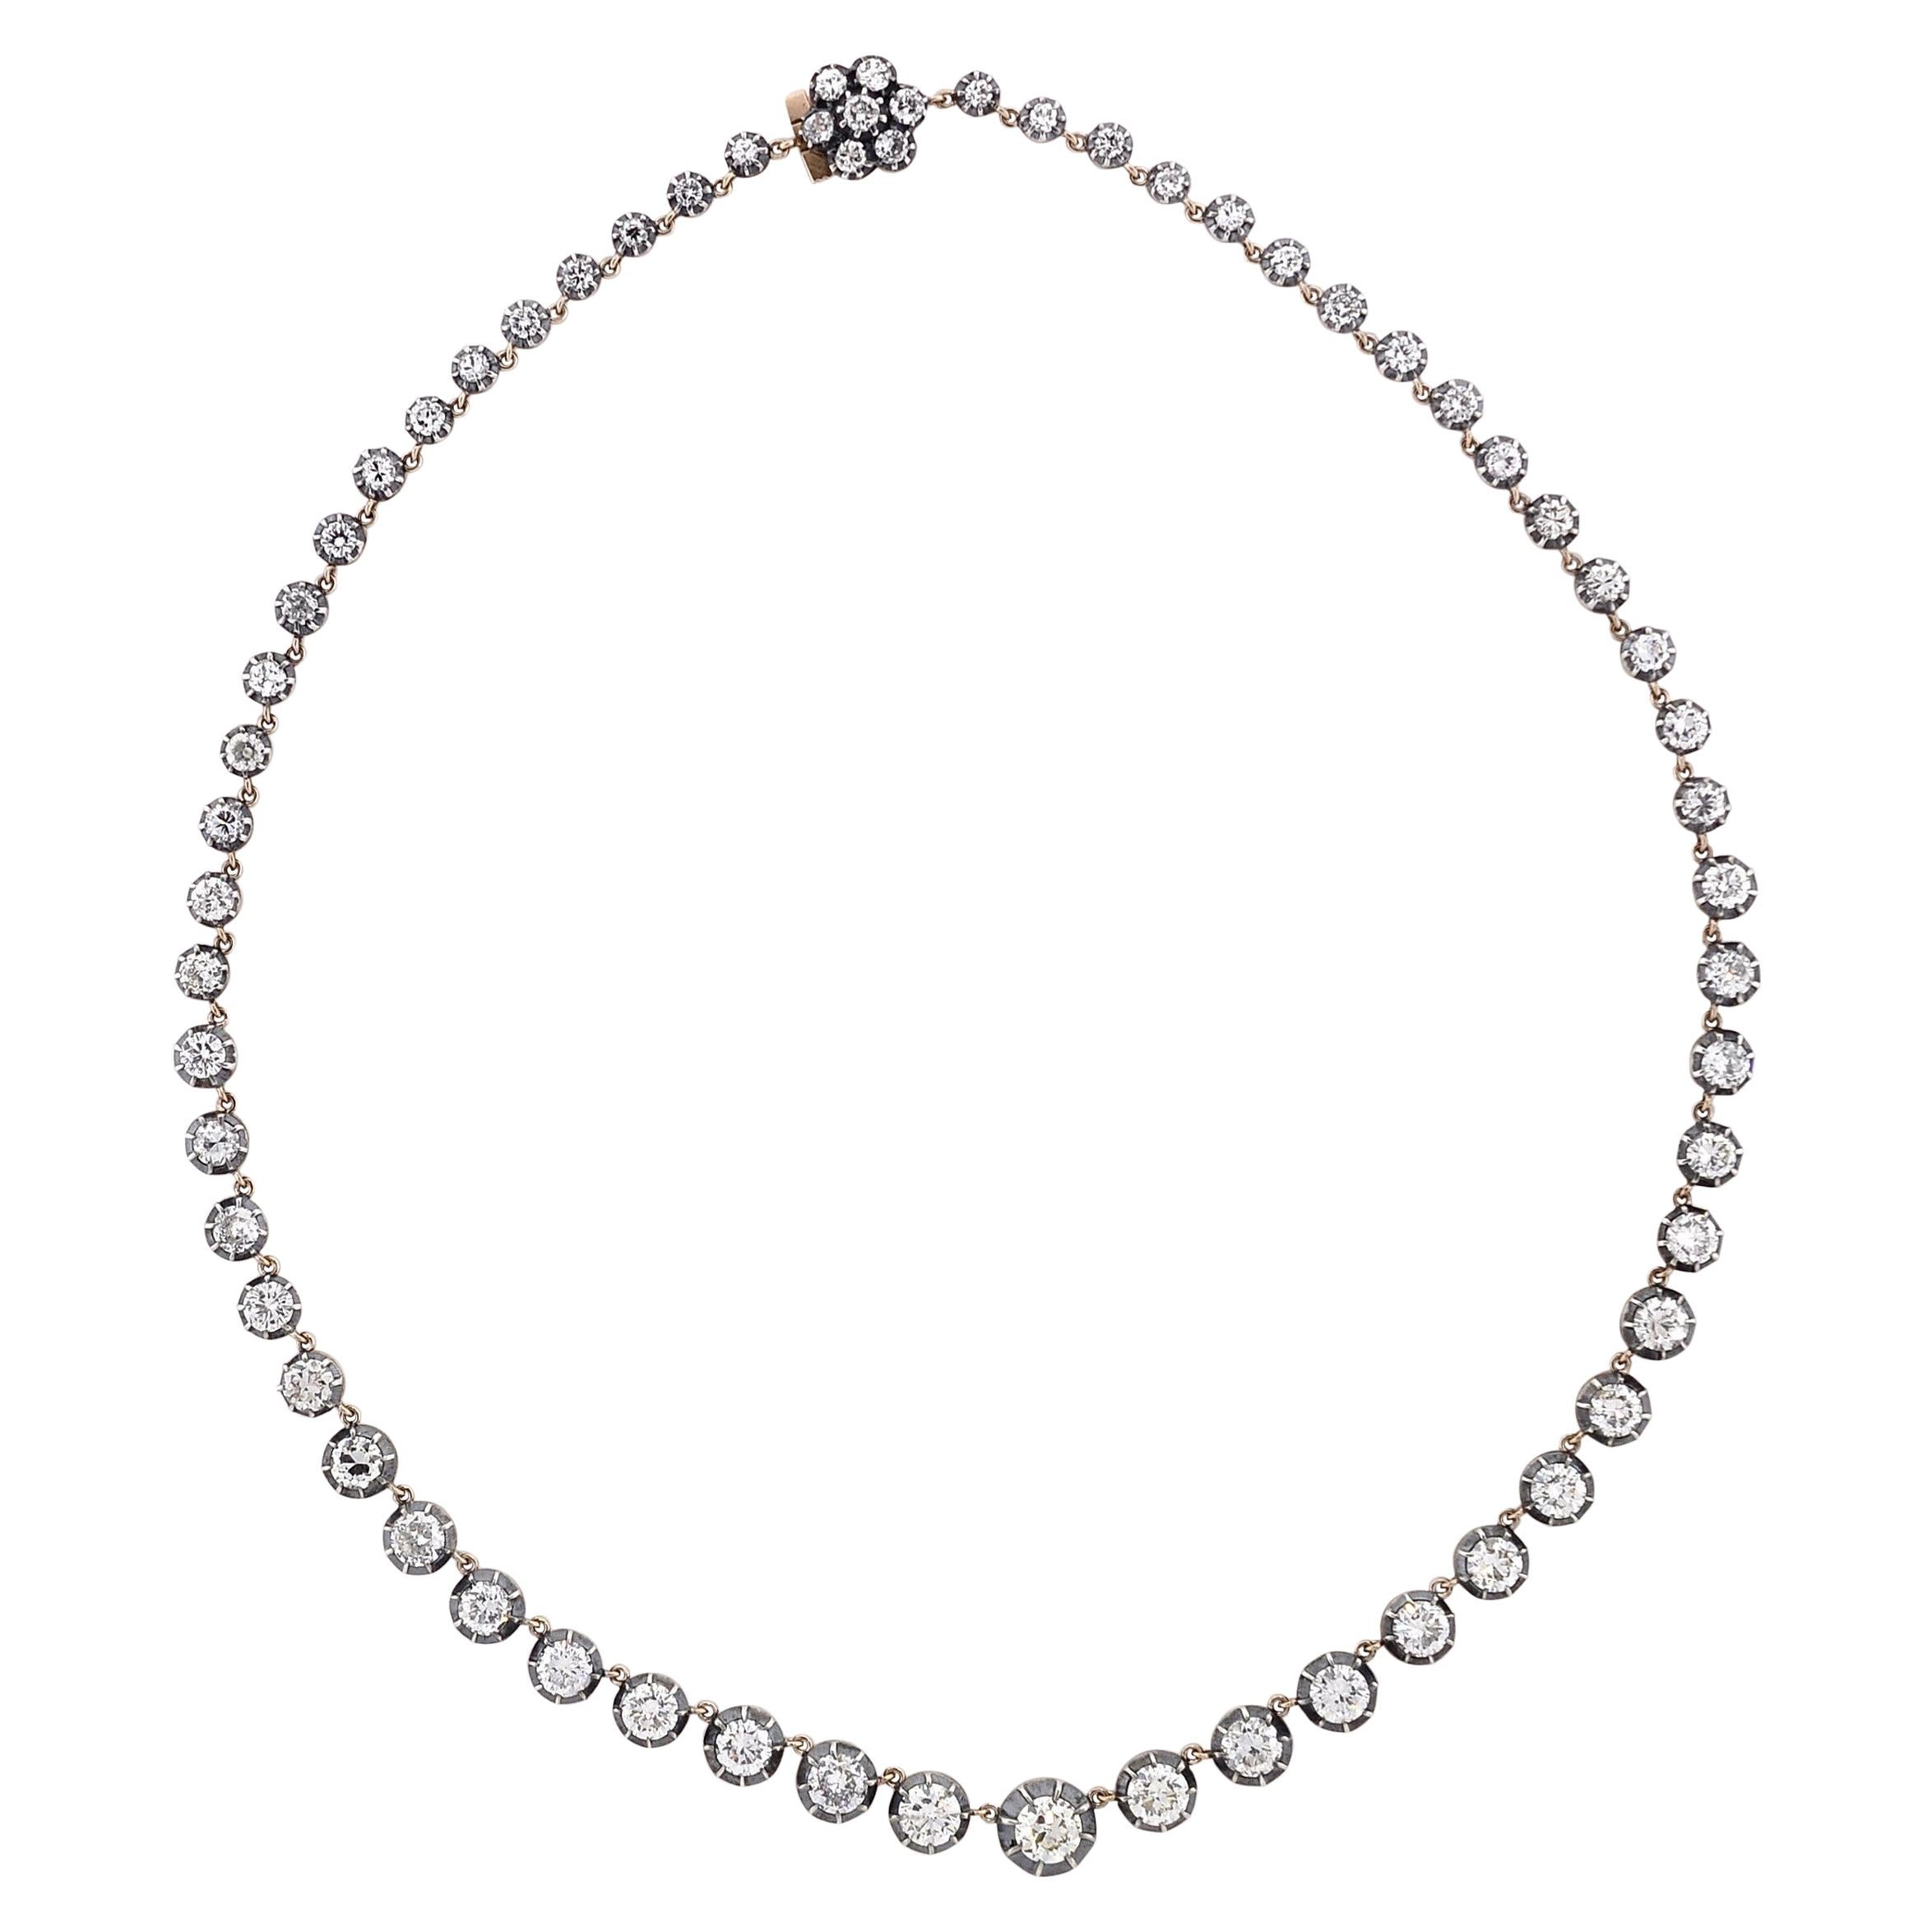 15.09 Carat Old Cut Diamond Victorian Revival Necklace For Sale